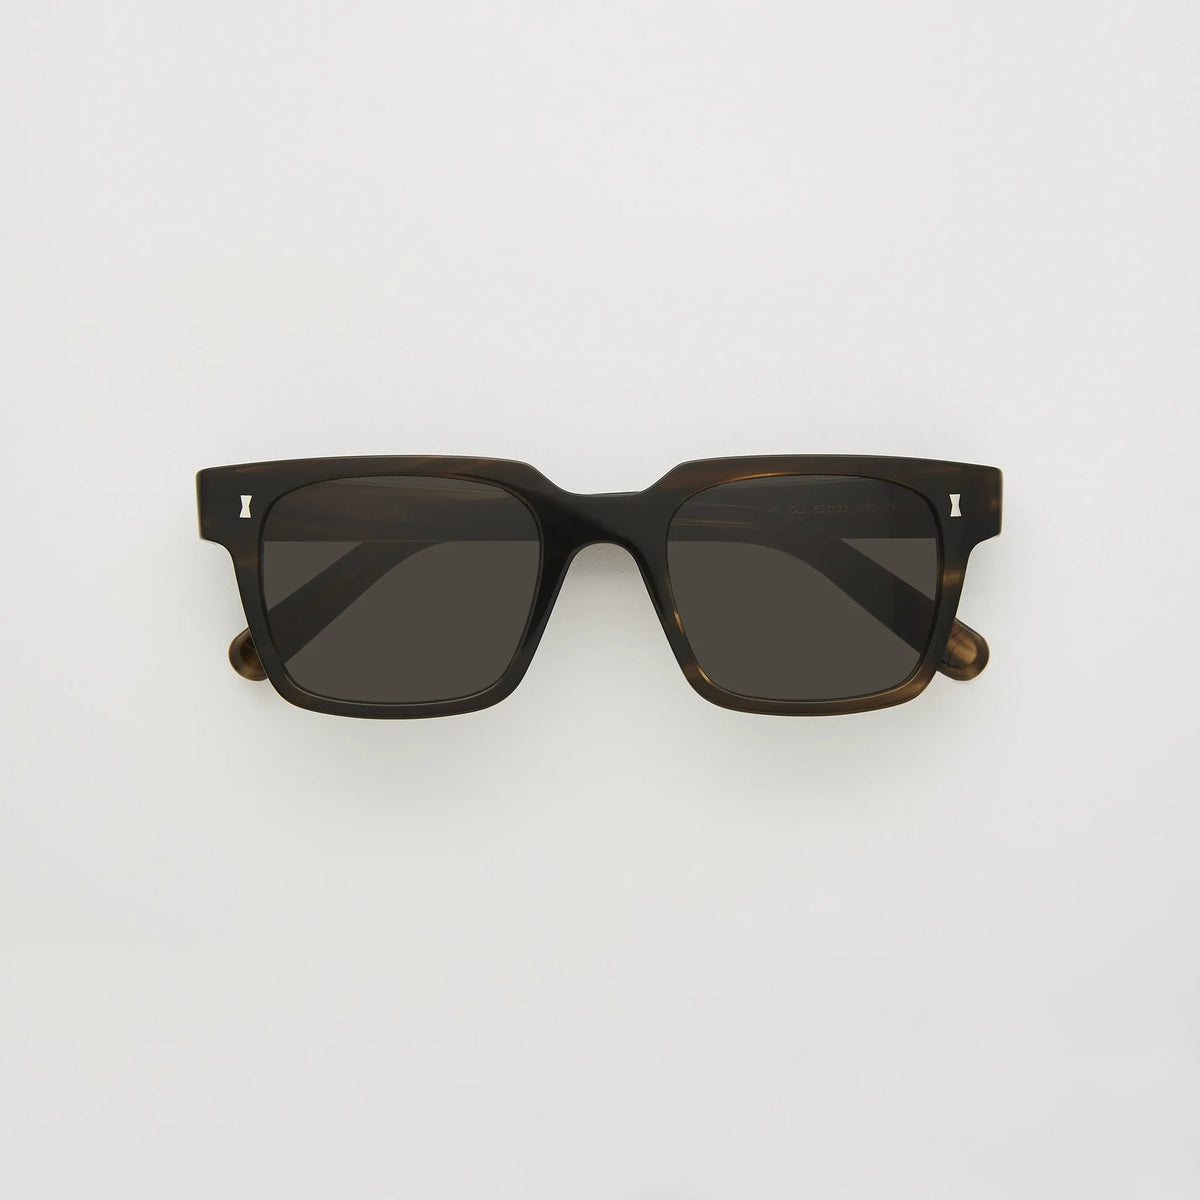 Olive Cubitts Panton sunglasses